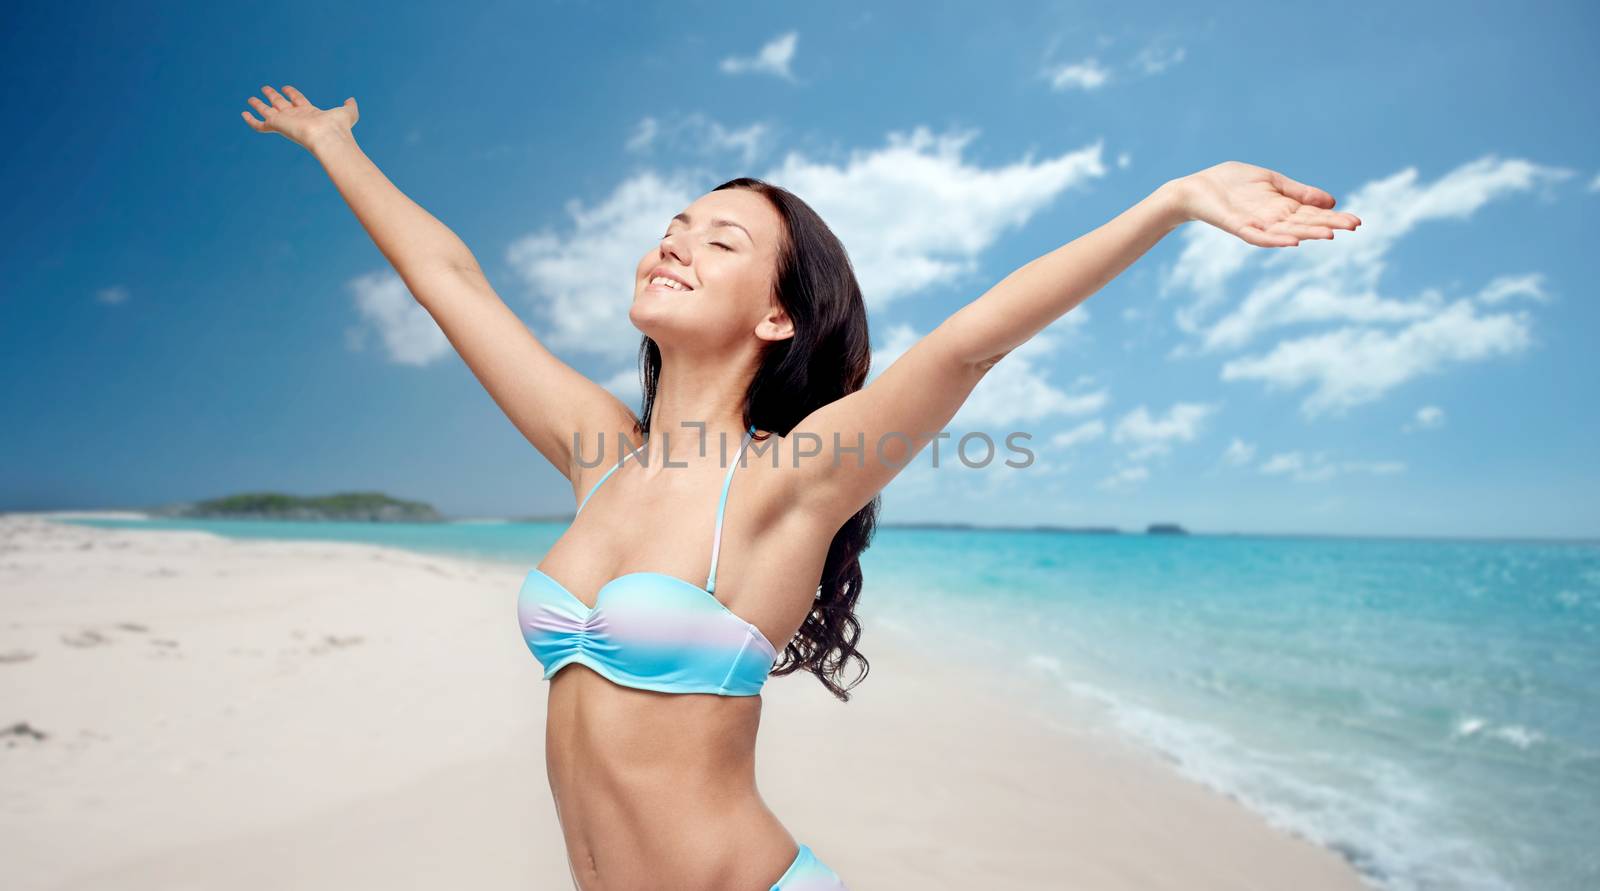 happy woman in bikini swimsuit with raised hands by dolgachov